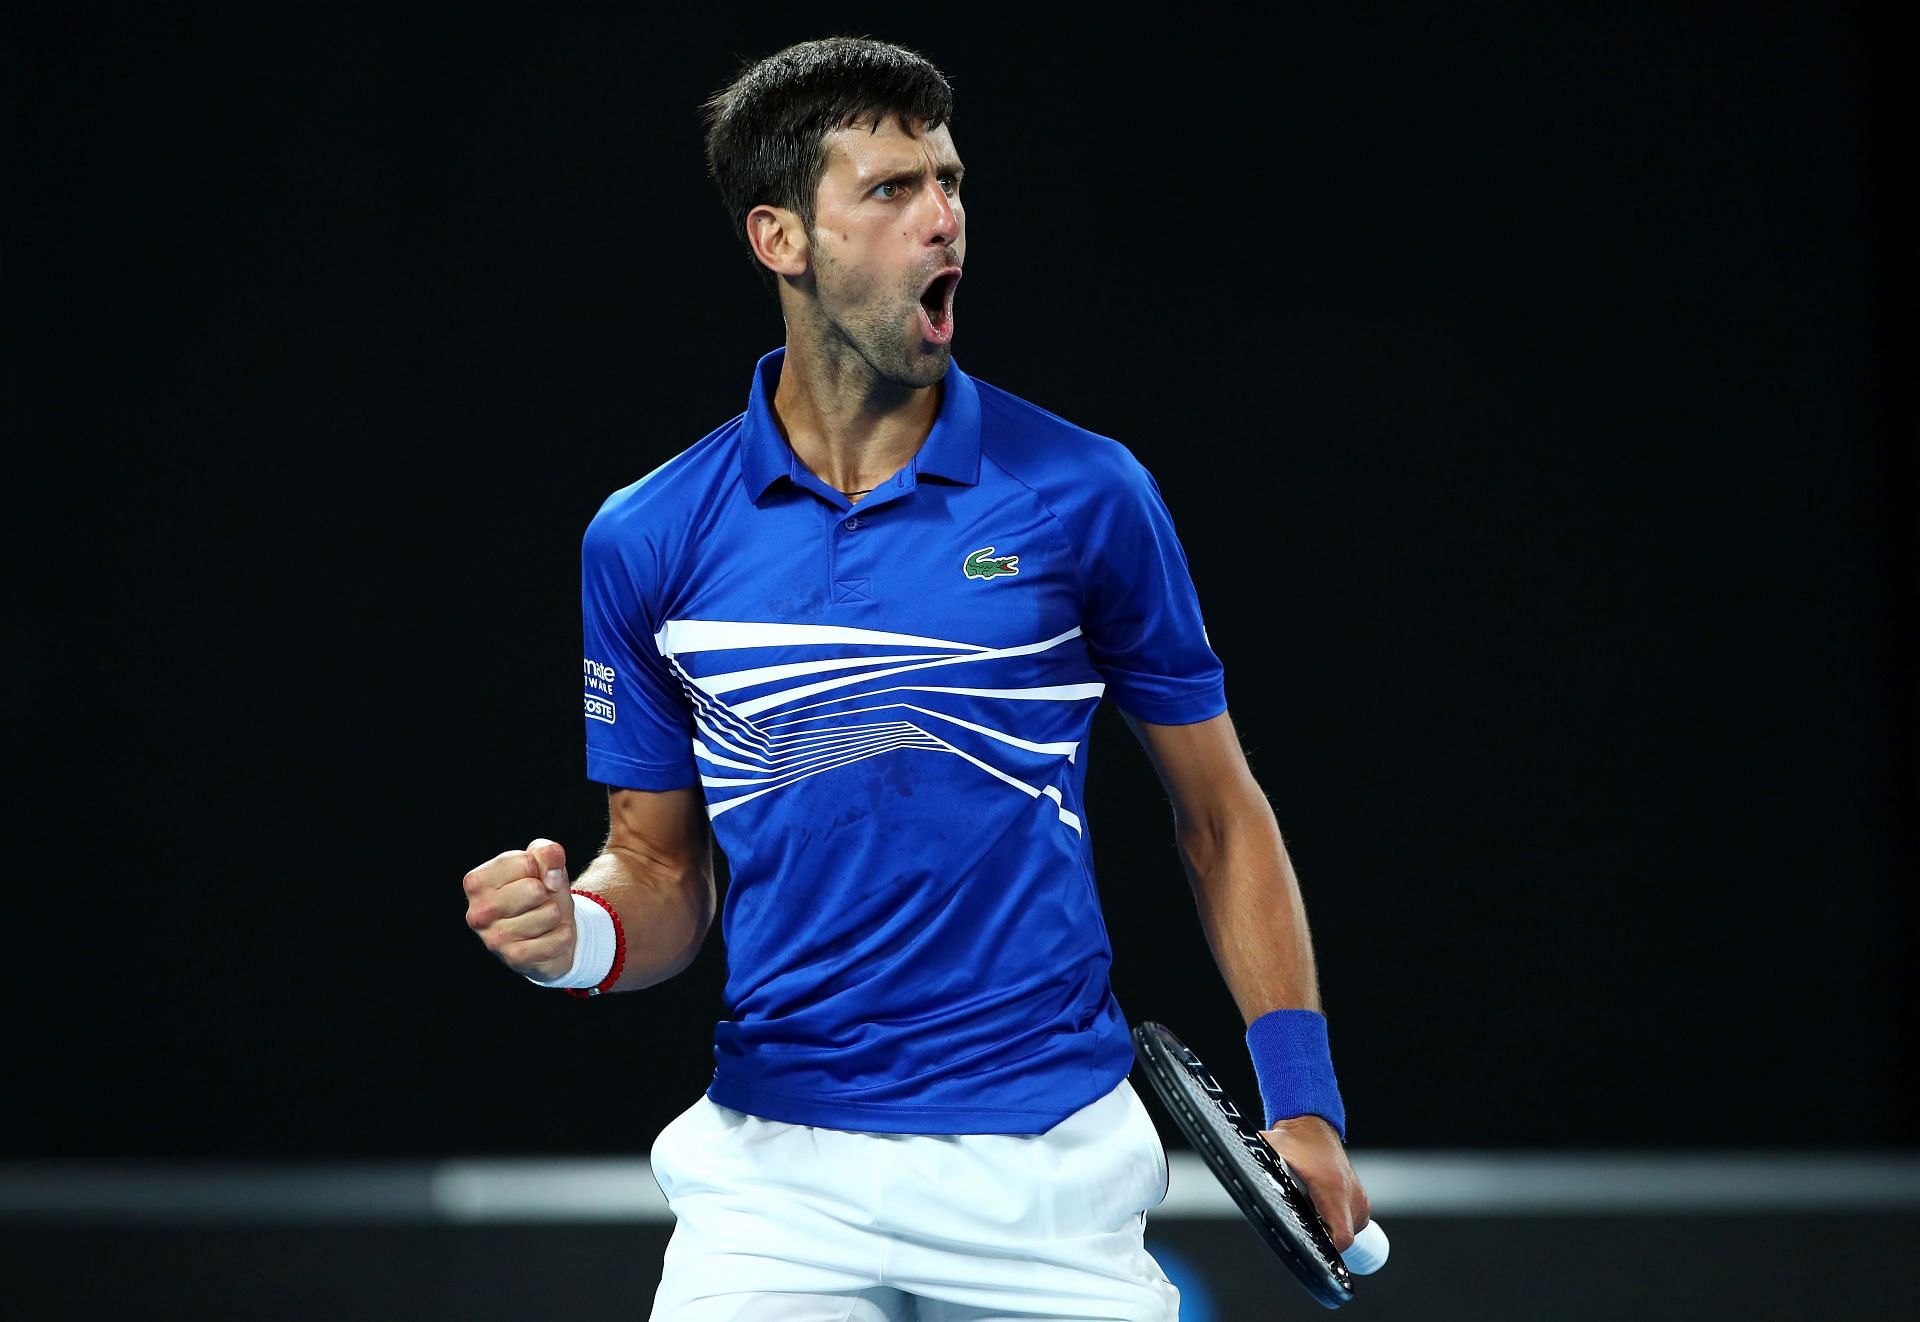 Novak Djokovic in action at the 2019 Australian Open